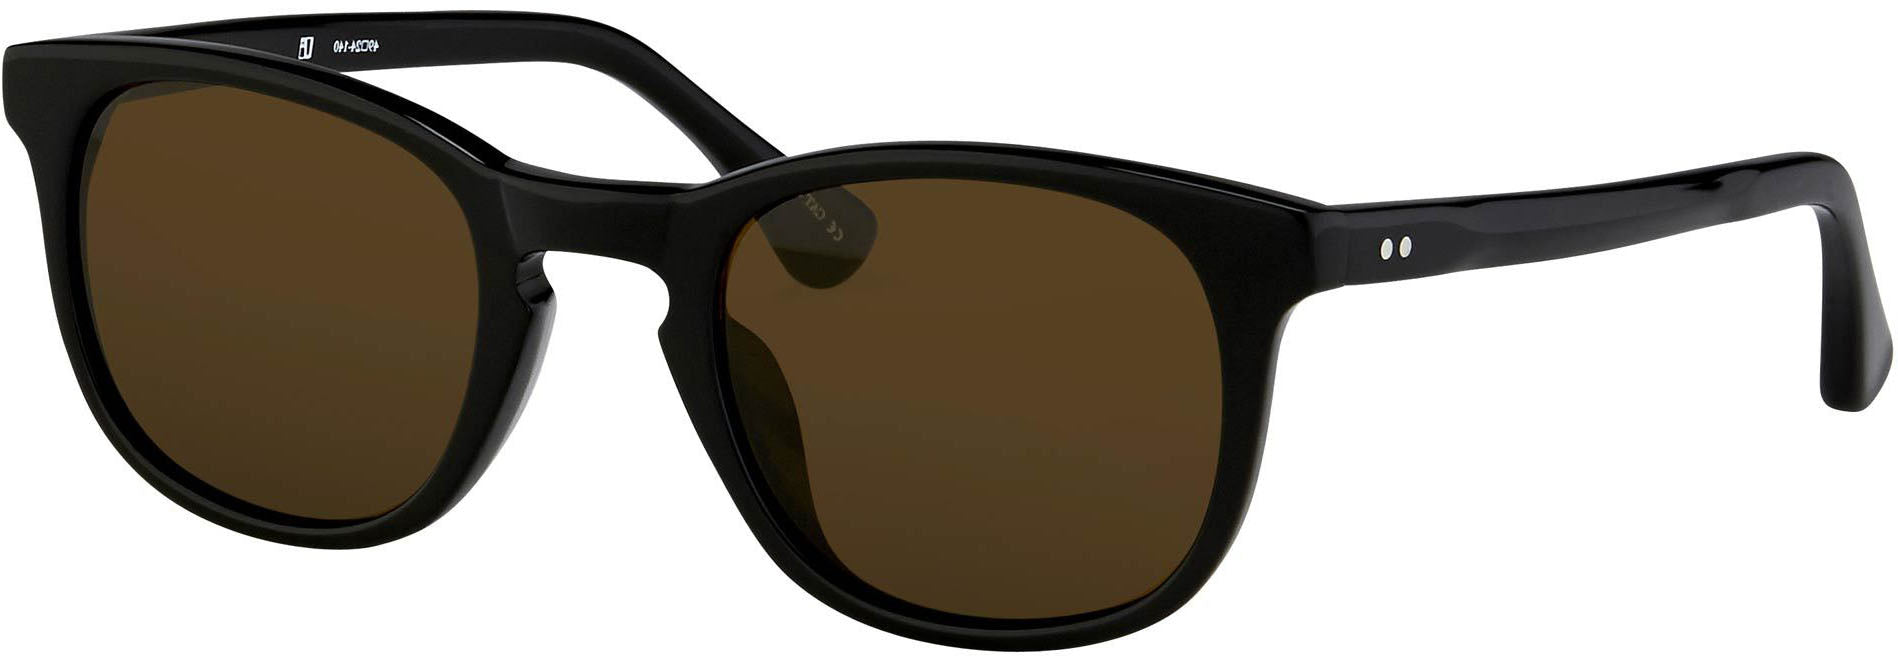 Color_DVN89C7SUN - Dries van Noten 89 C7 D-Frame Sunglasses